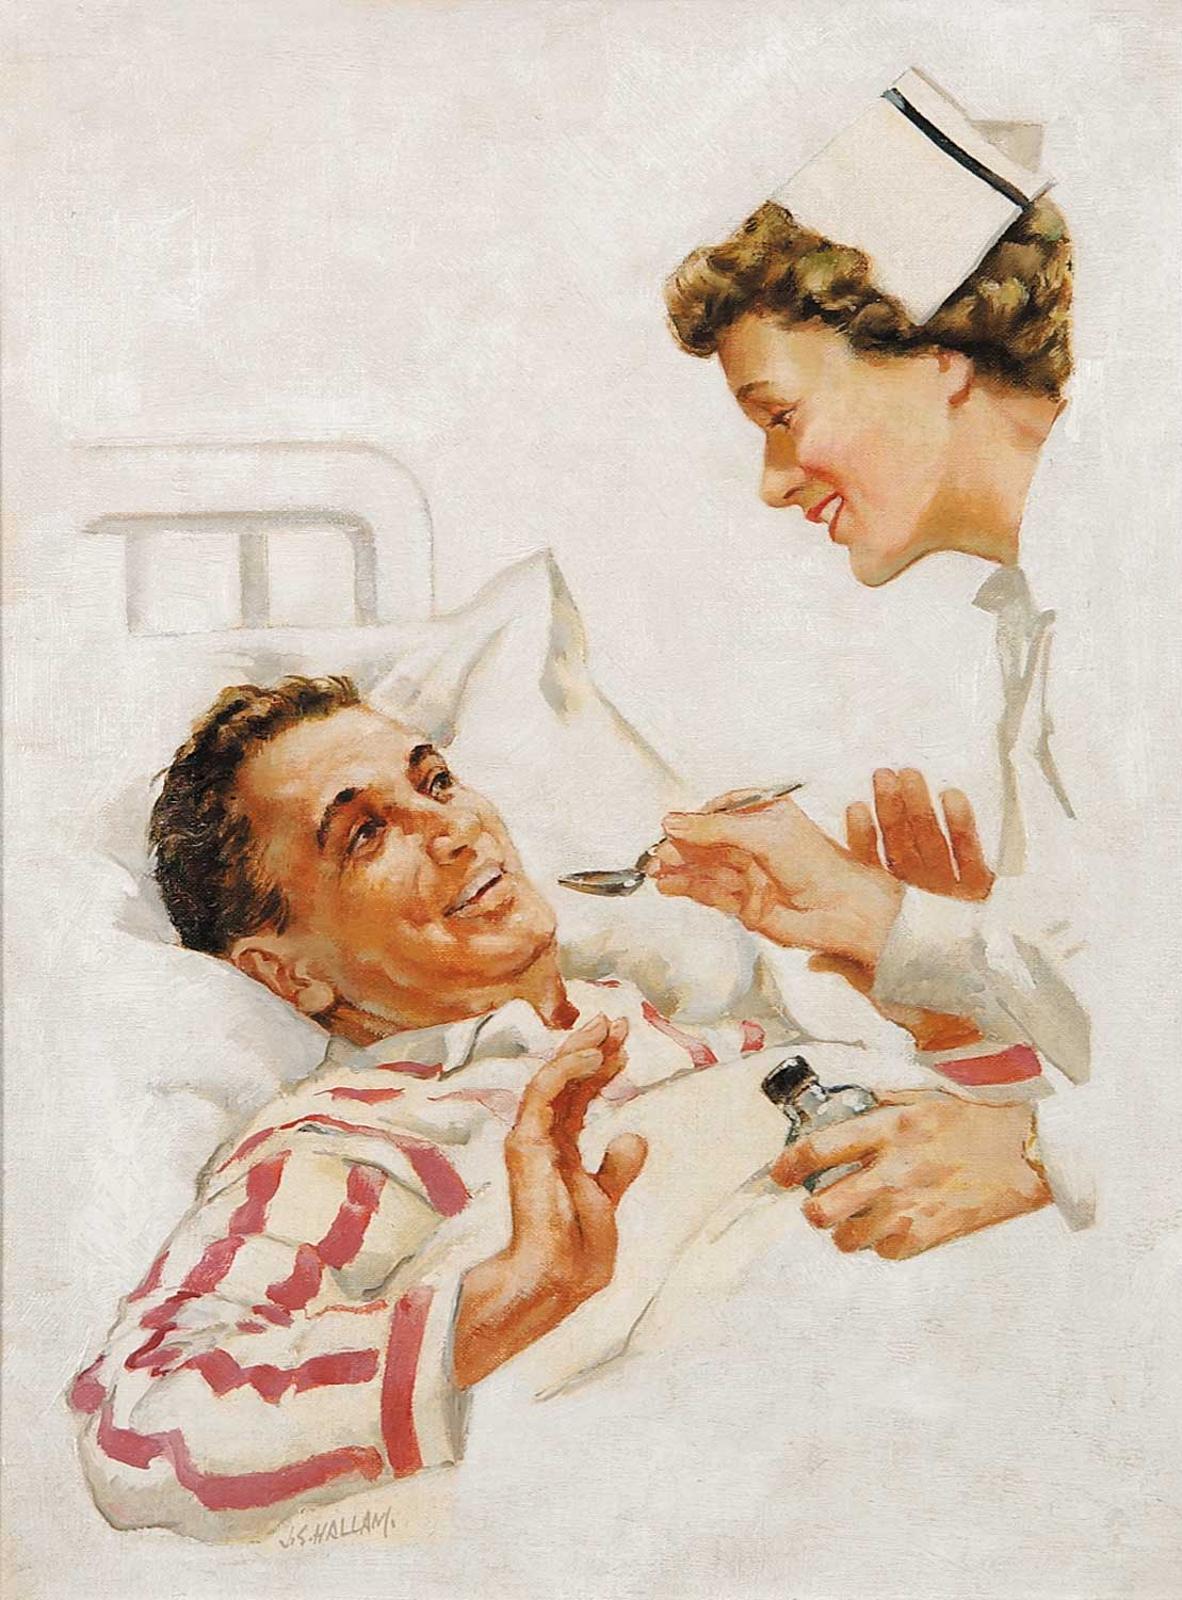 Joseph Sydney Hallam (1899-1953) - Untitled - Nurse and Patient